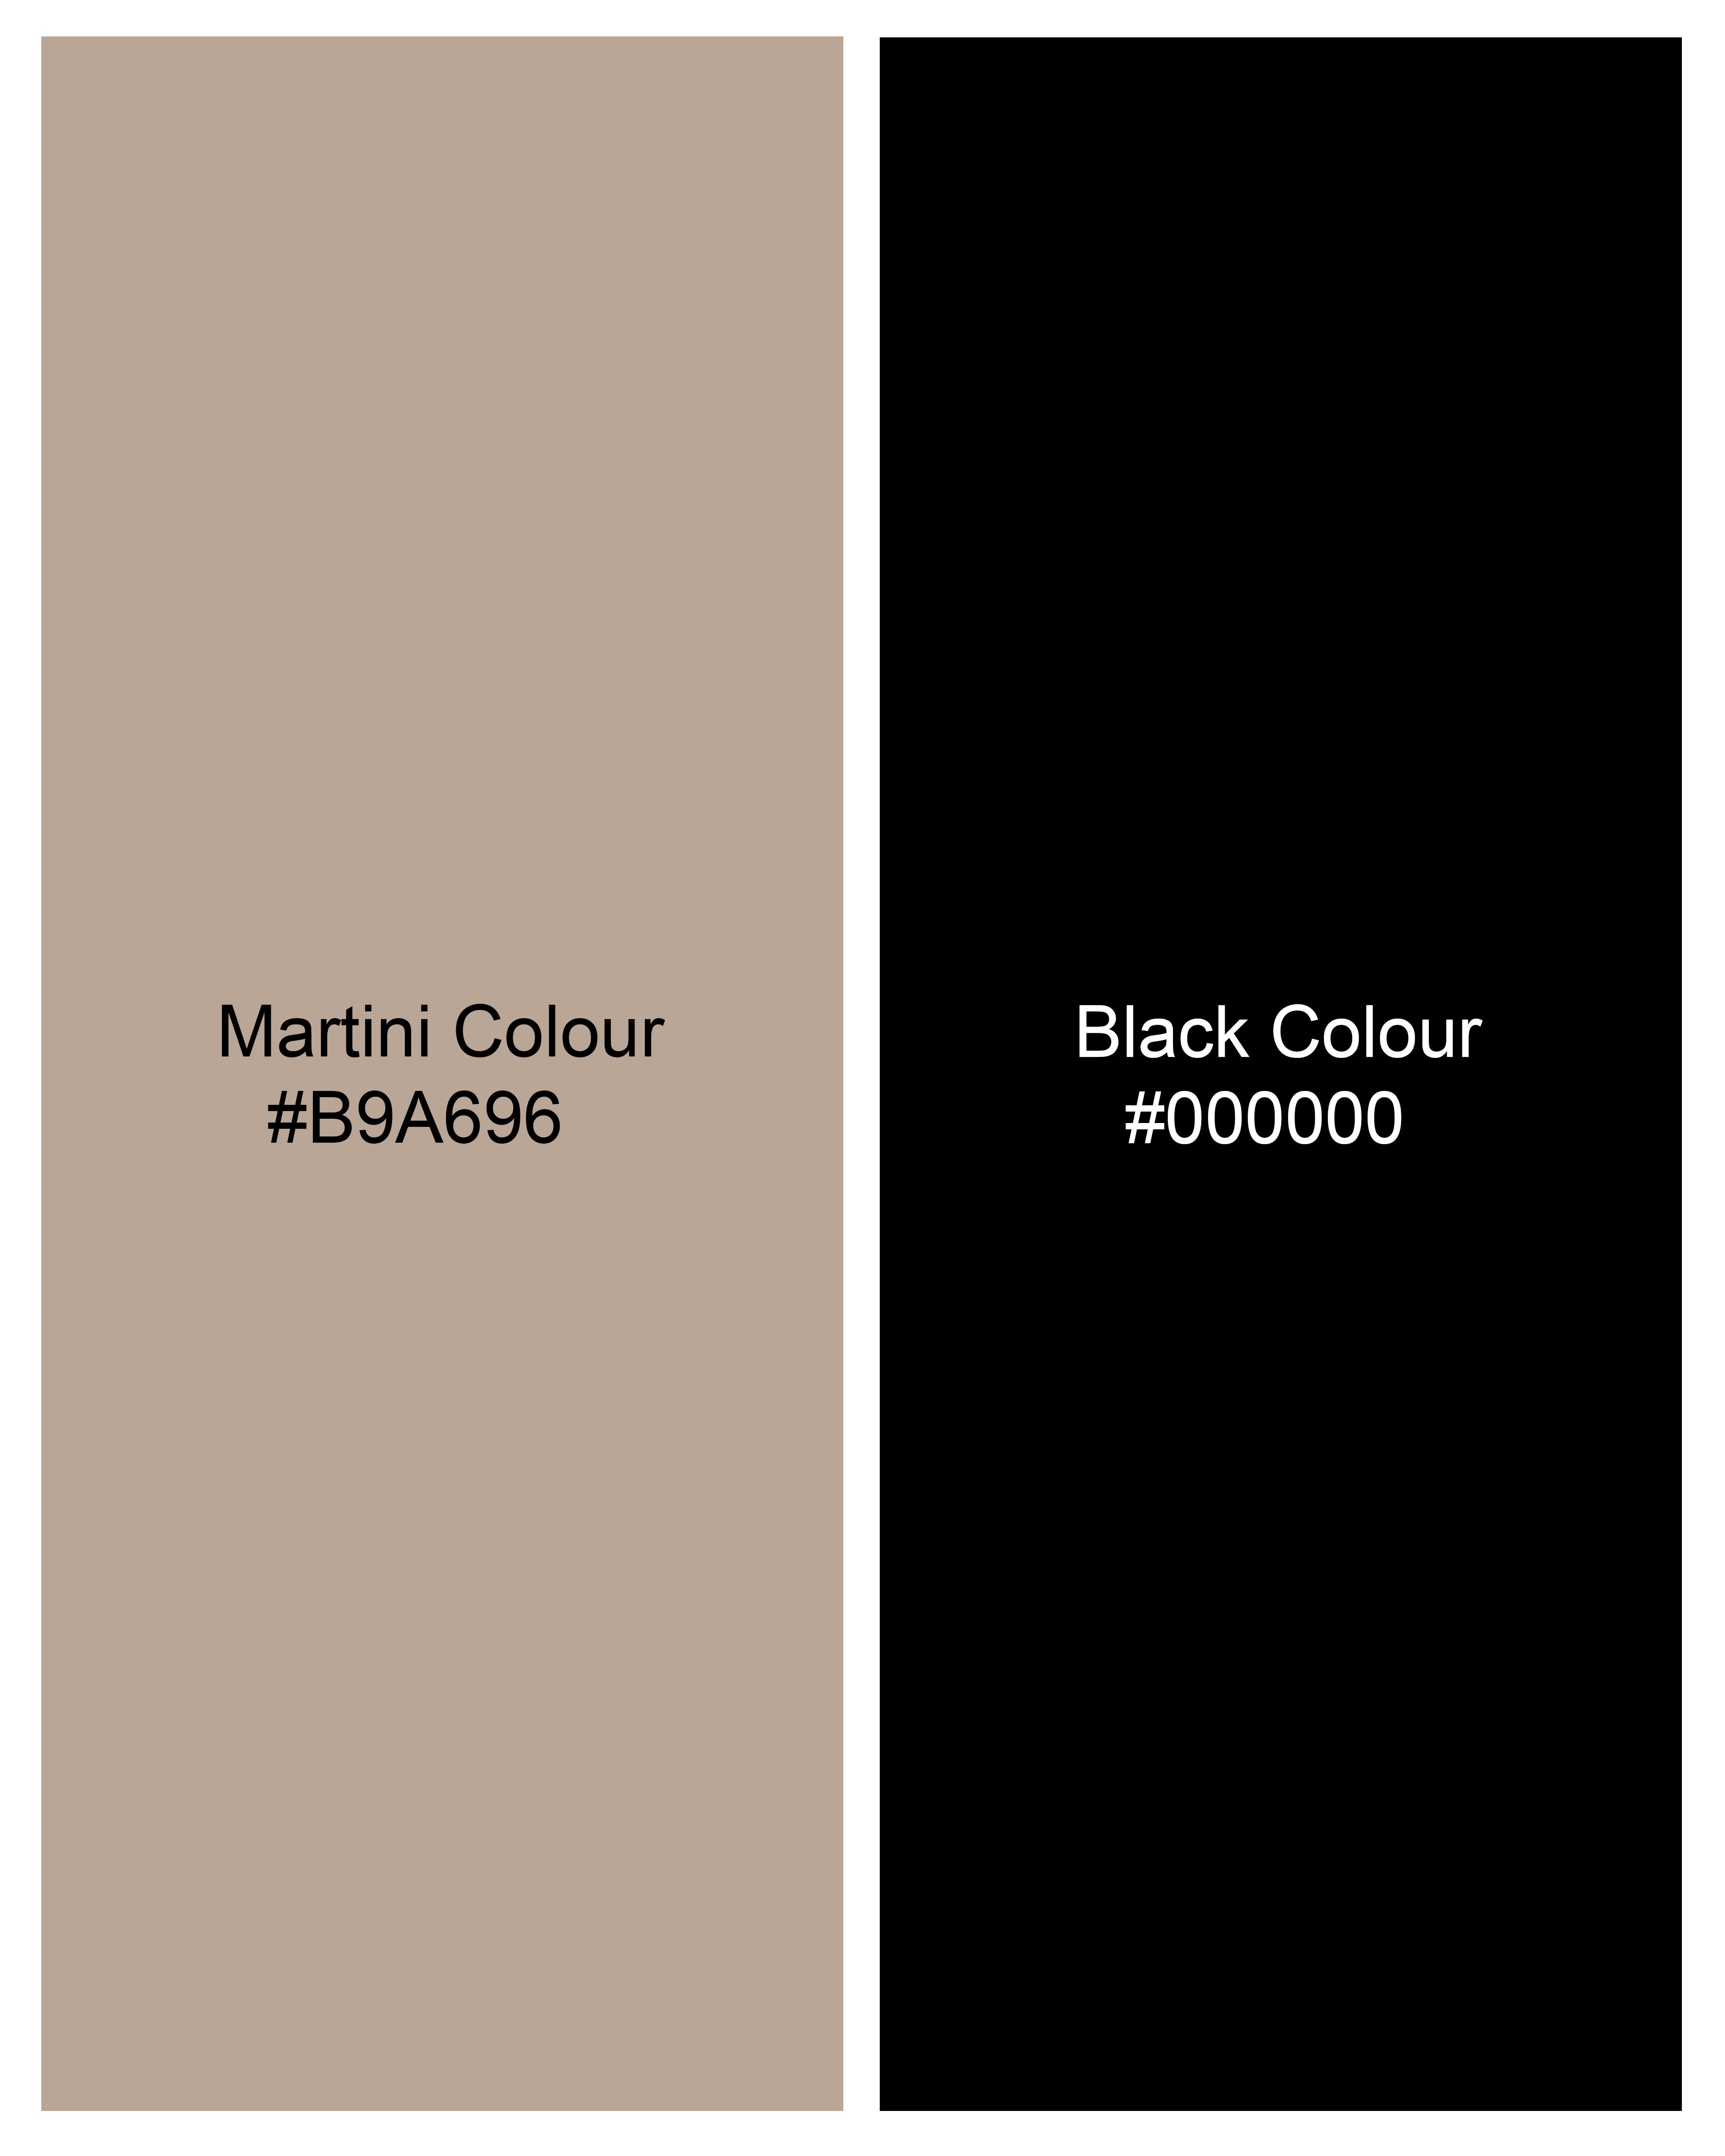 Martini Brown and Black Premium Cotton Designer Suit ST2375-SB-D230-36, ST2375-SB-D230-38, ST2375-SB-D230-40, ST2375-SB-D230-42, ST2375-SB-D230-44, ST2375-SB-D230-46, ST2375-SB-D230-48, ST2375-SB-D230-50, ST2375-SB-D230-52, ST2375-SB-D230-54, ST2375-SB-D230-56, ST2375-SB-D230-58, ST2375-SB-D230-60